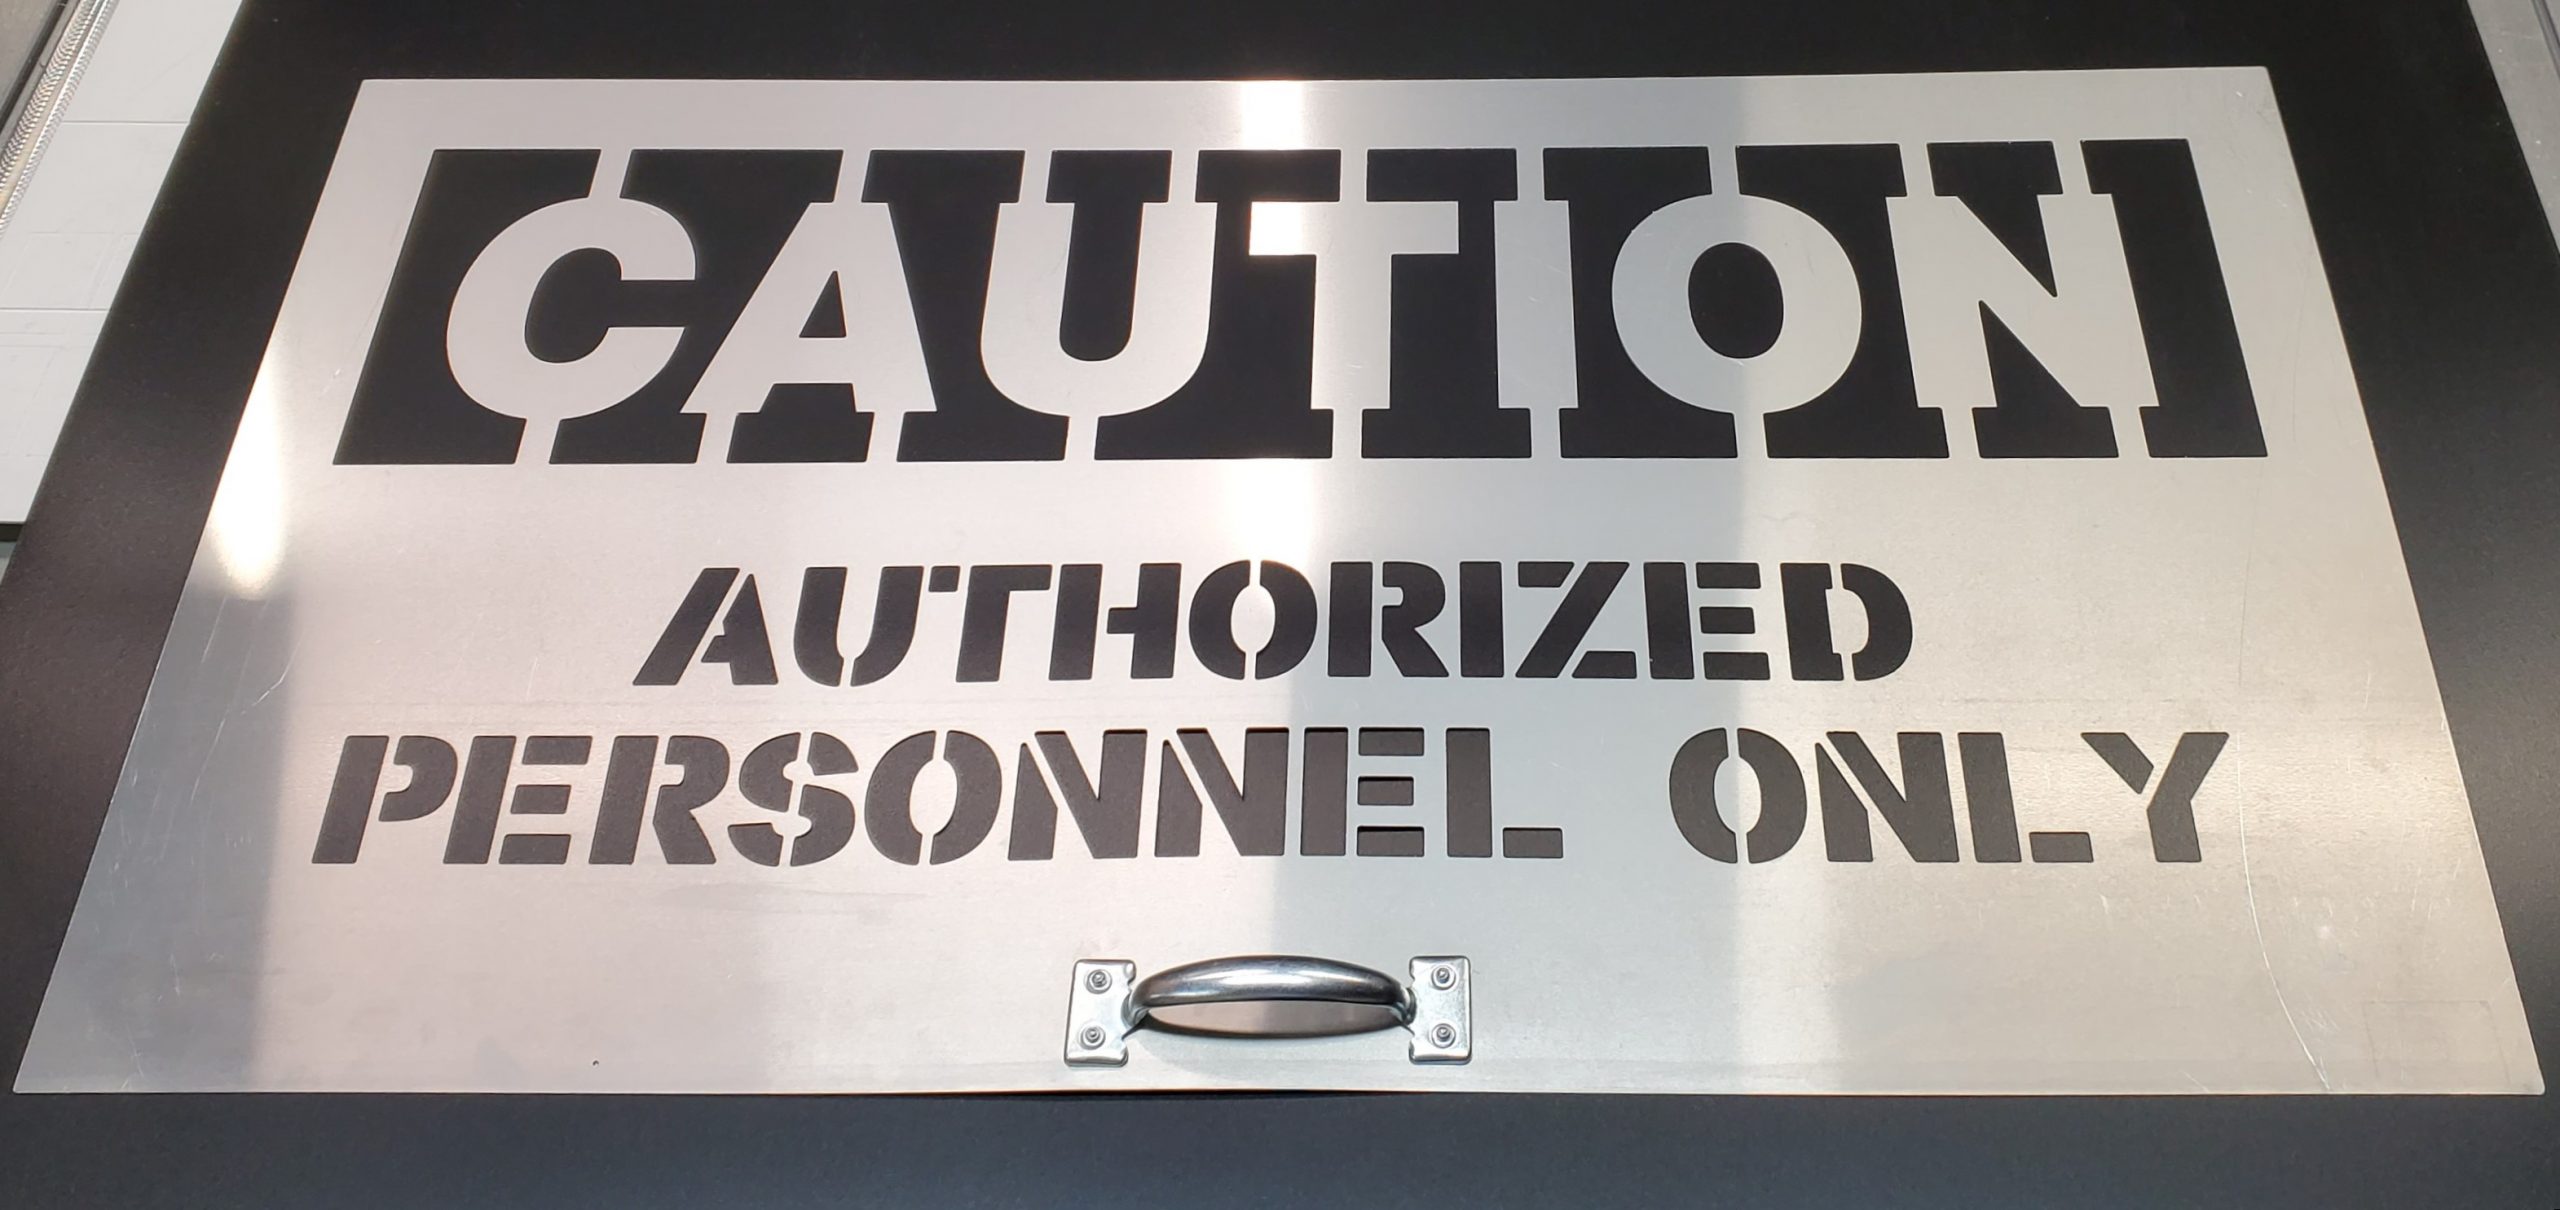 Caution aluminum stencil with handle